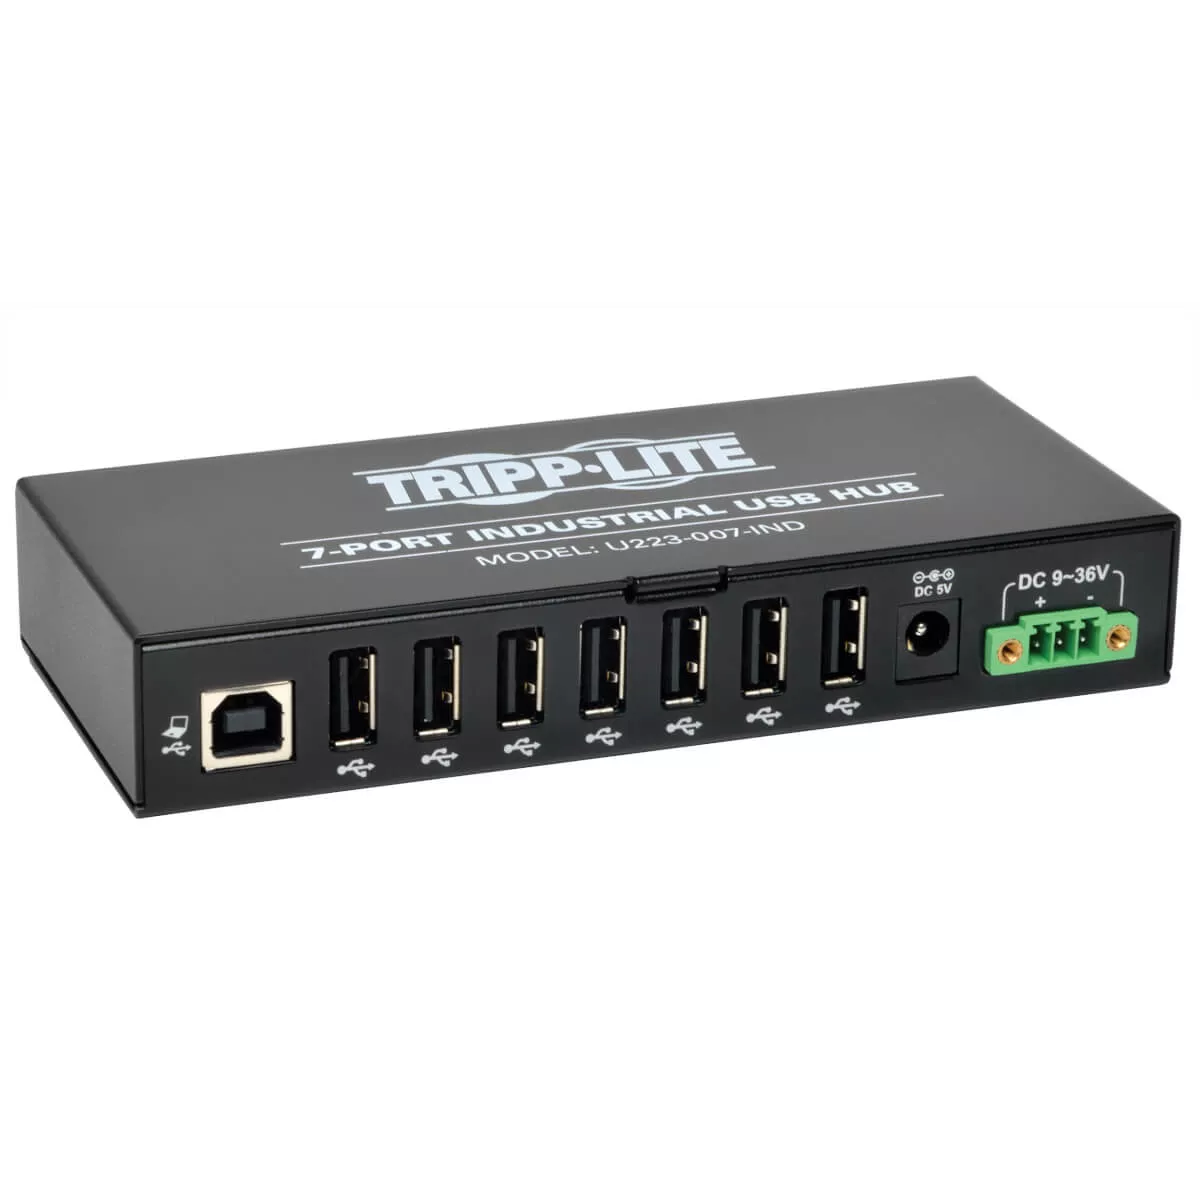 Revendeur officiel Switchs et Hubs EATON TRIPPLITE 7-Port Industrial-Grade USB 2.0 Hub 15kV